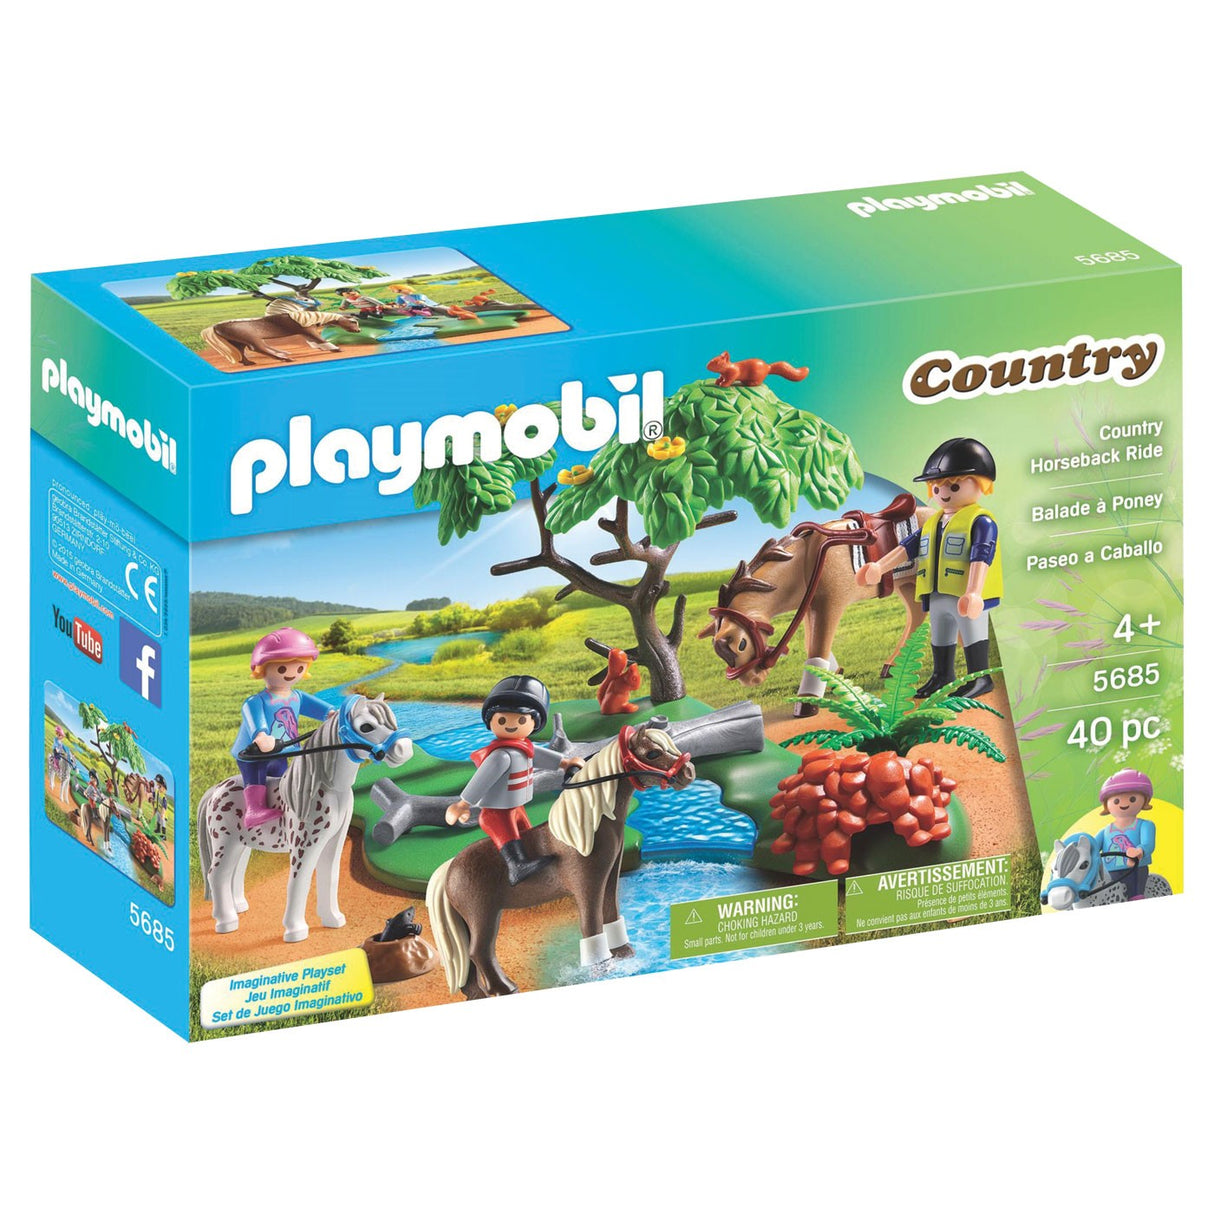 Playmobil Pony Farm Country Horseback Ride